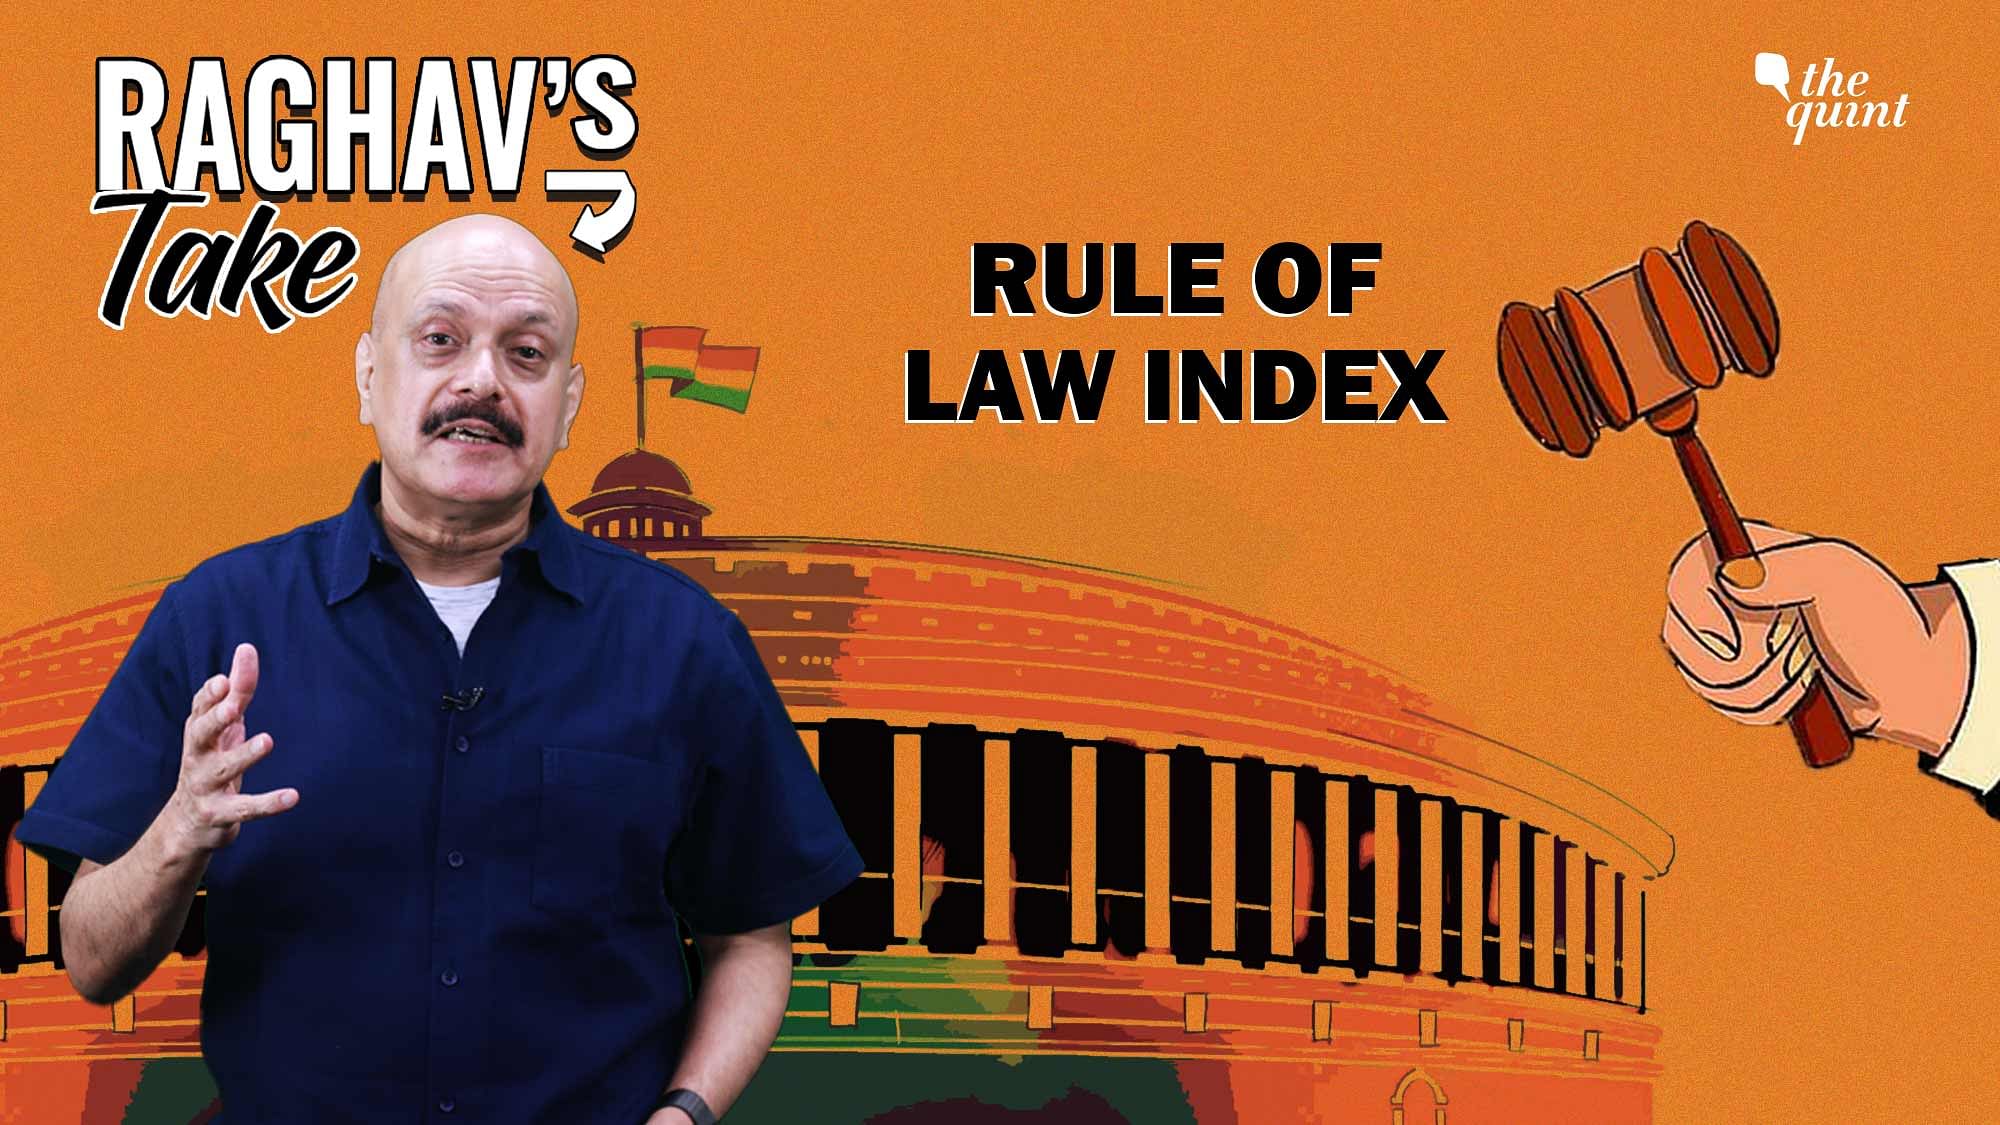 <div class="paragraphs"><p>Explained: The Rule of Law Index</p></div>